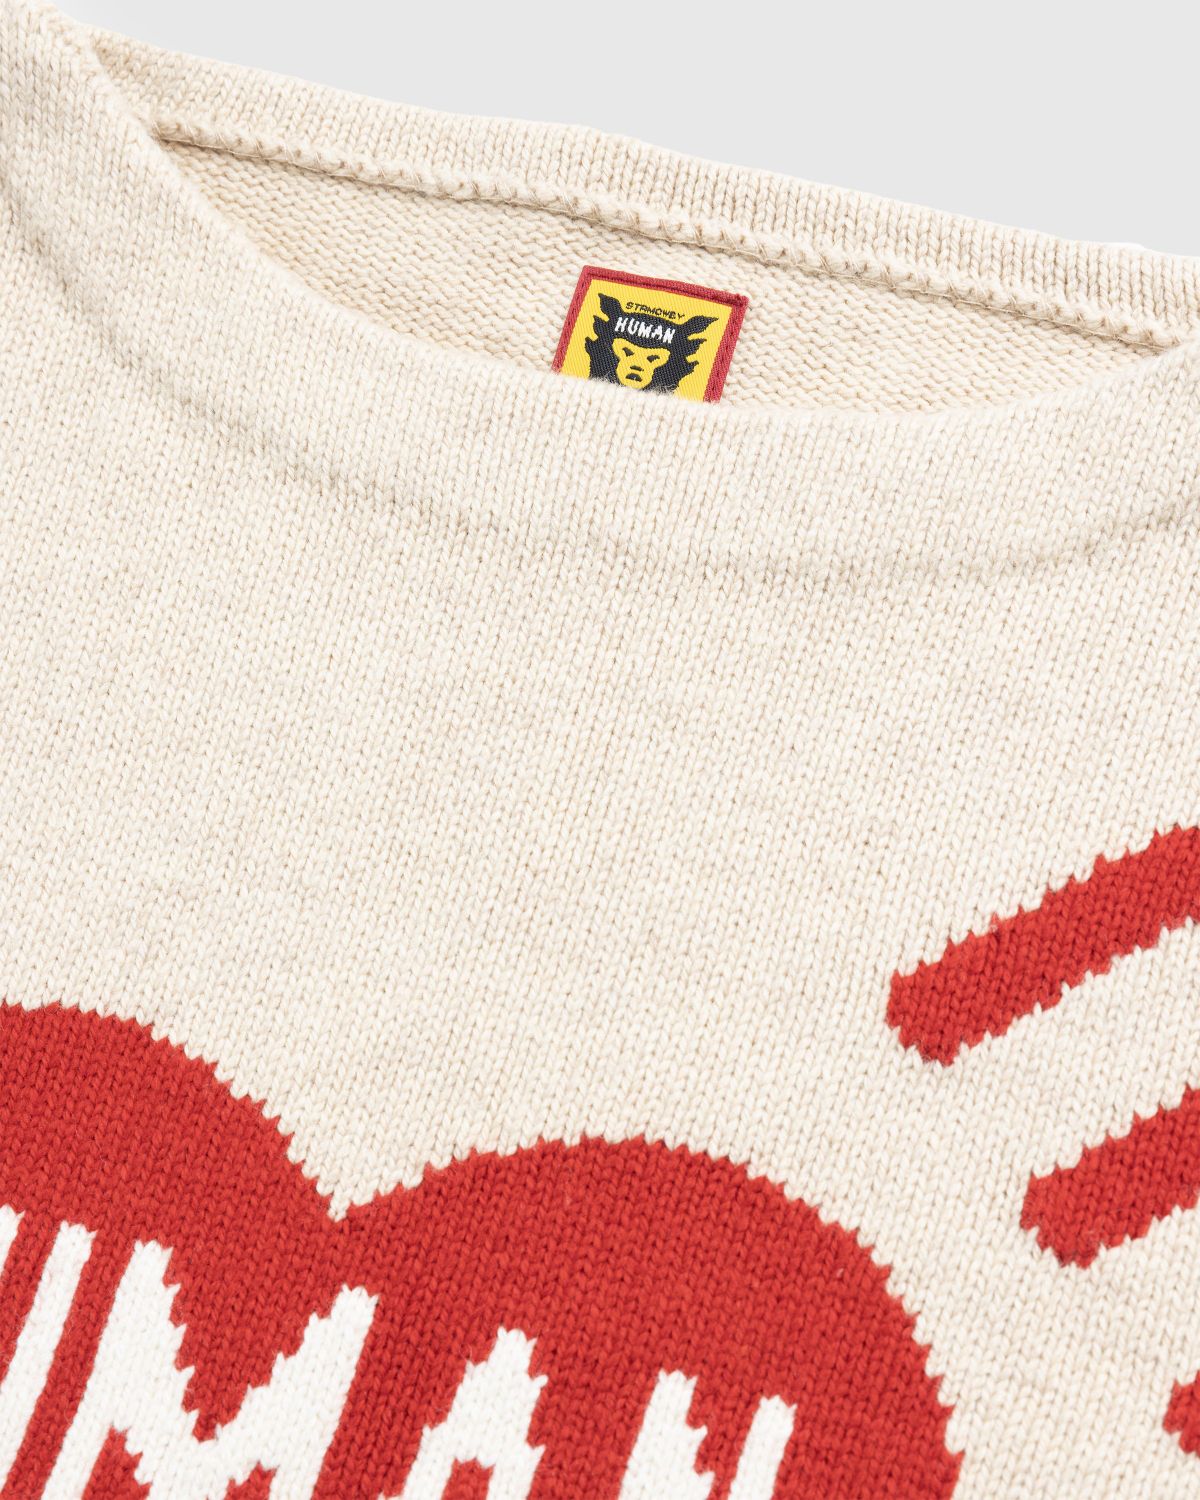 Human Made – Heart Knit Sweater Beige